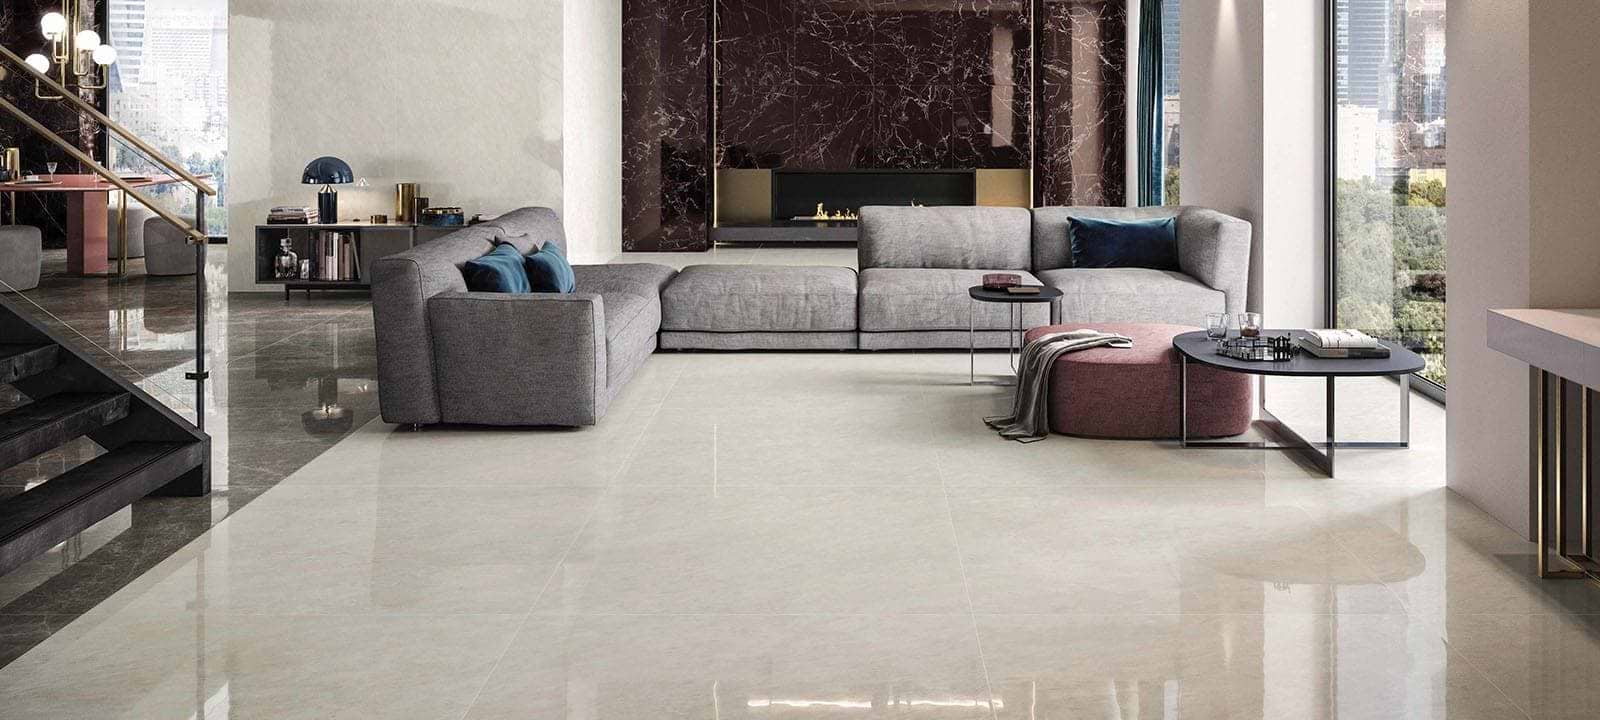 Minoli Wall & Floor Tiles Marvel Imperial White